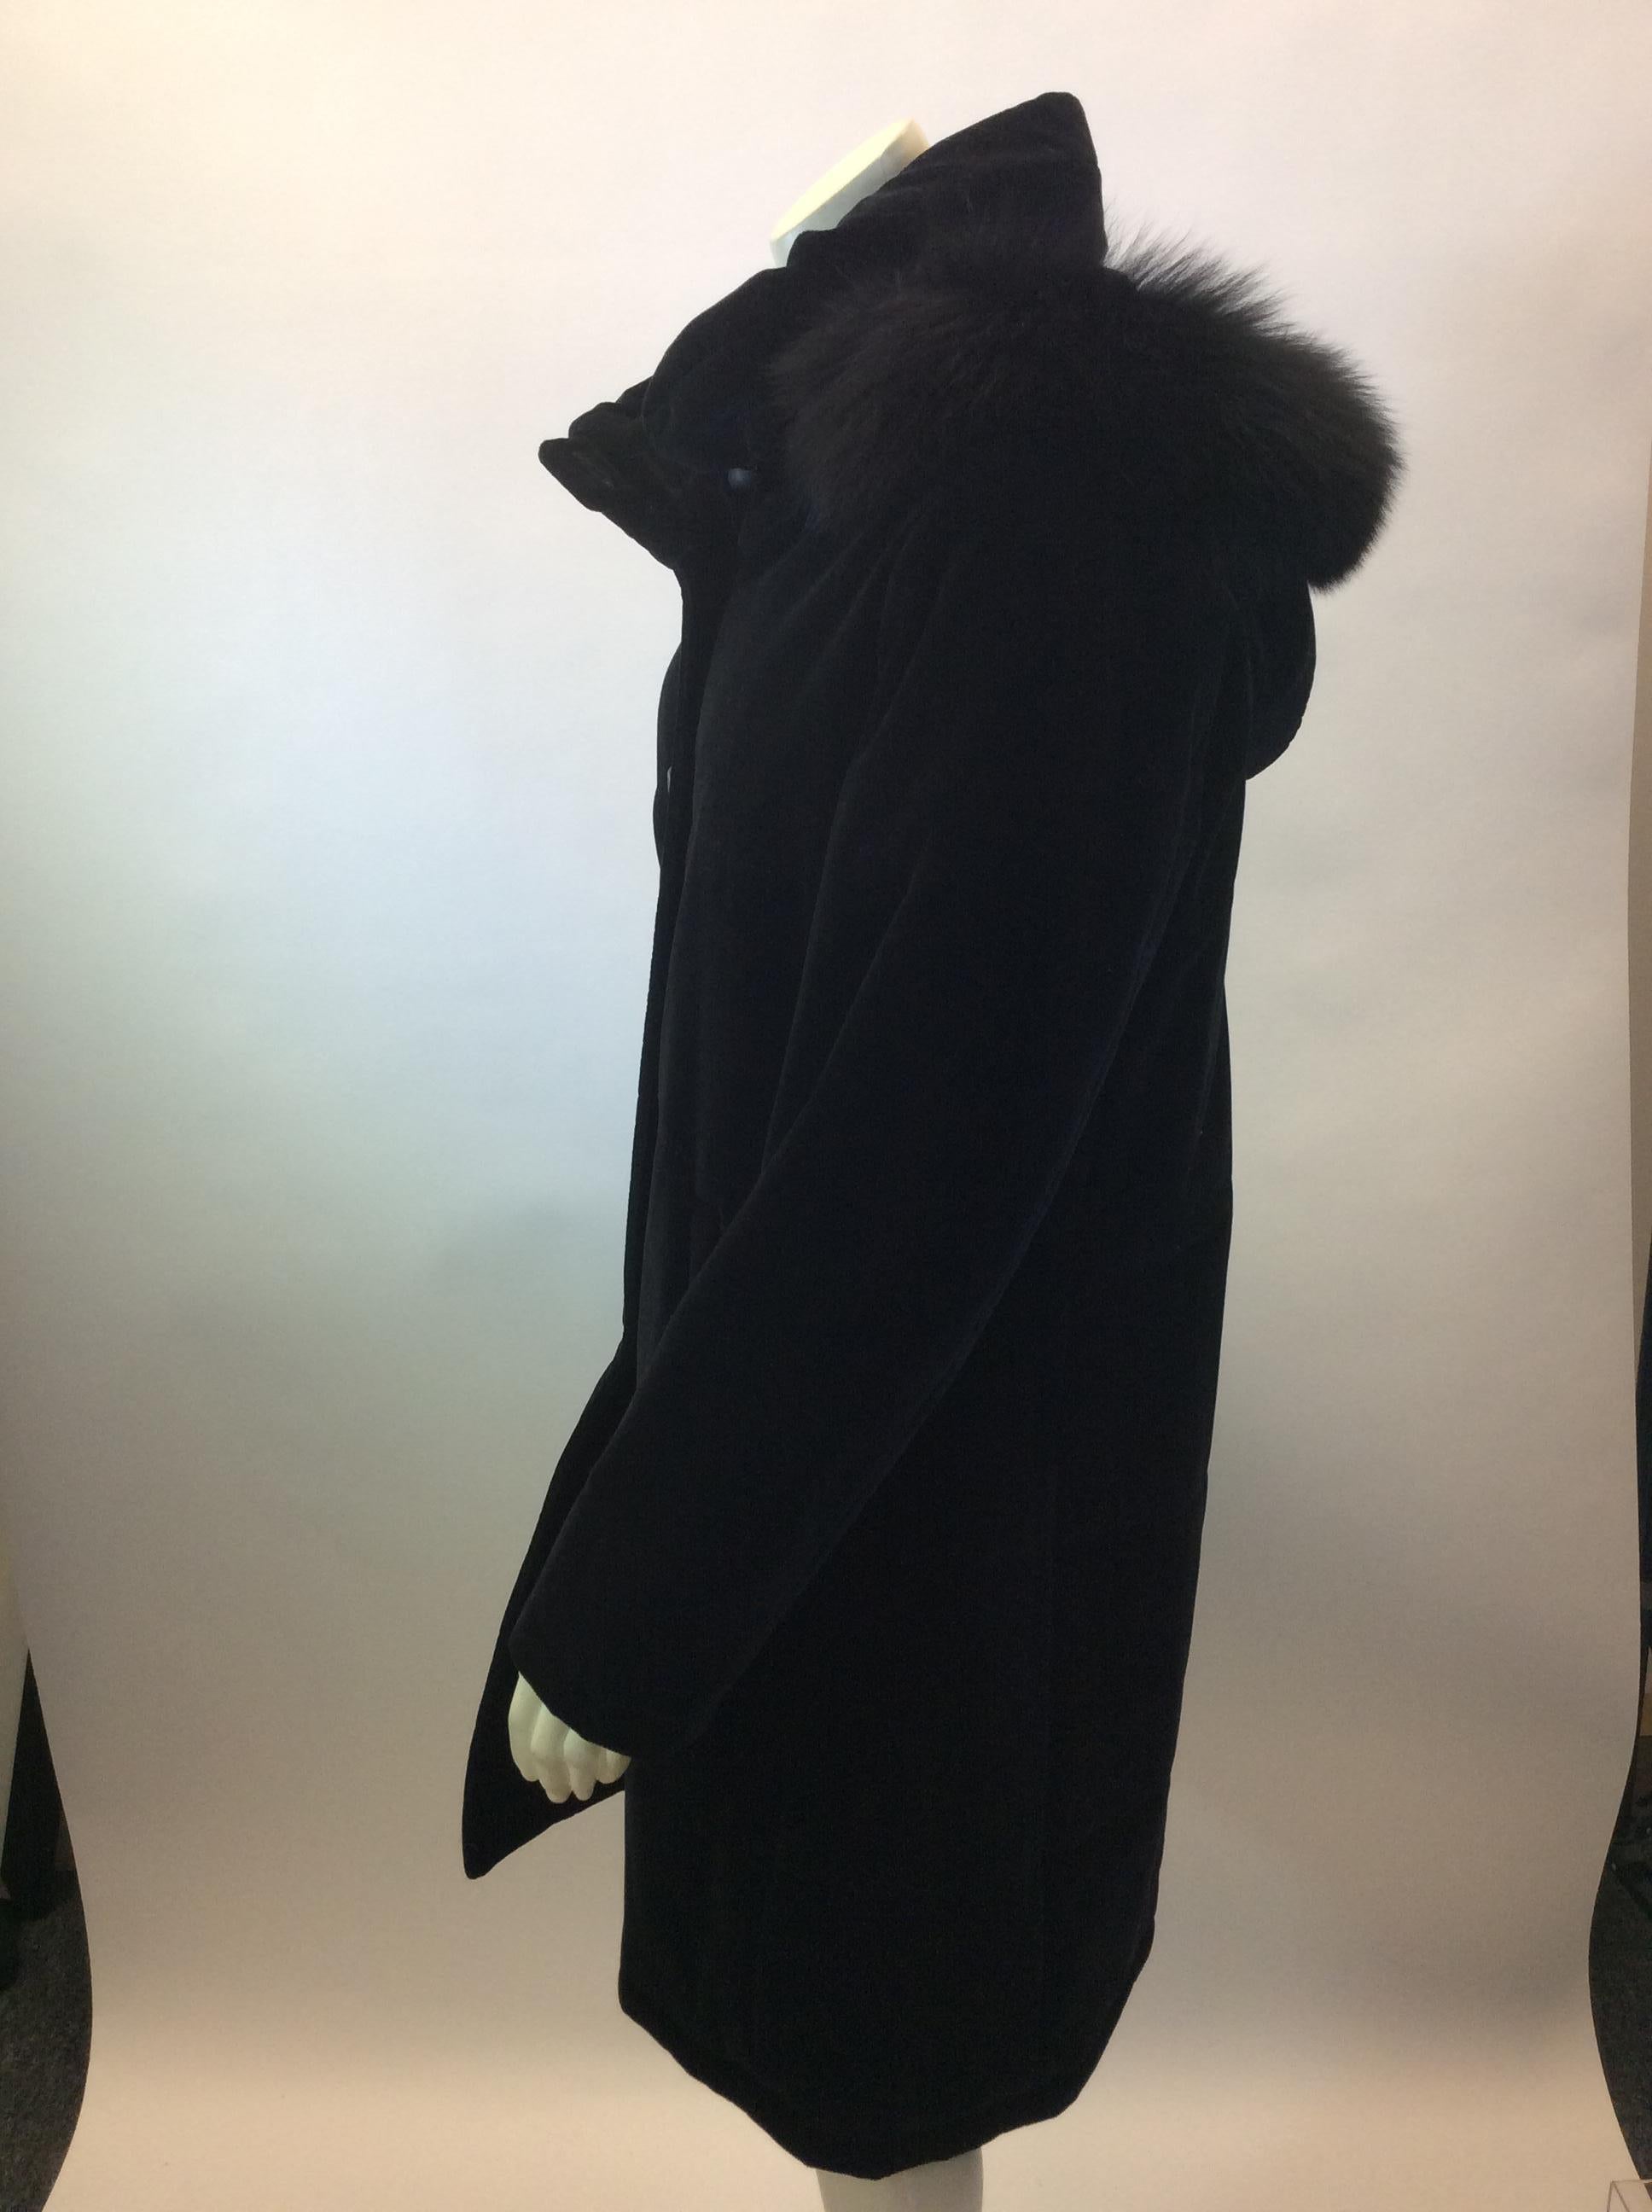 Jane Post Black Velvet with Fox Fur Trim Coat NWT
$300
Made in China
88% Cotton, 12% Rayon
100% Fox Fur Trim
Size Medium
Length 36.5